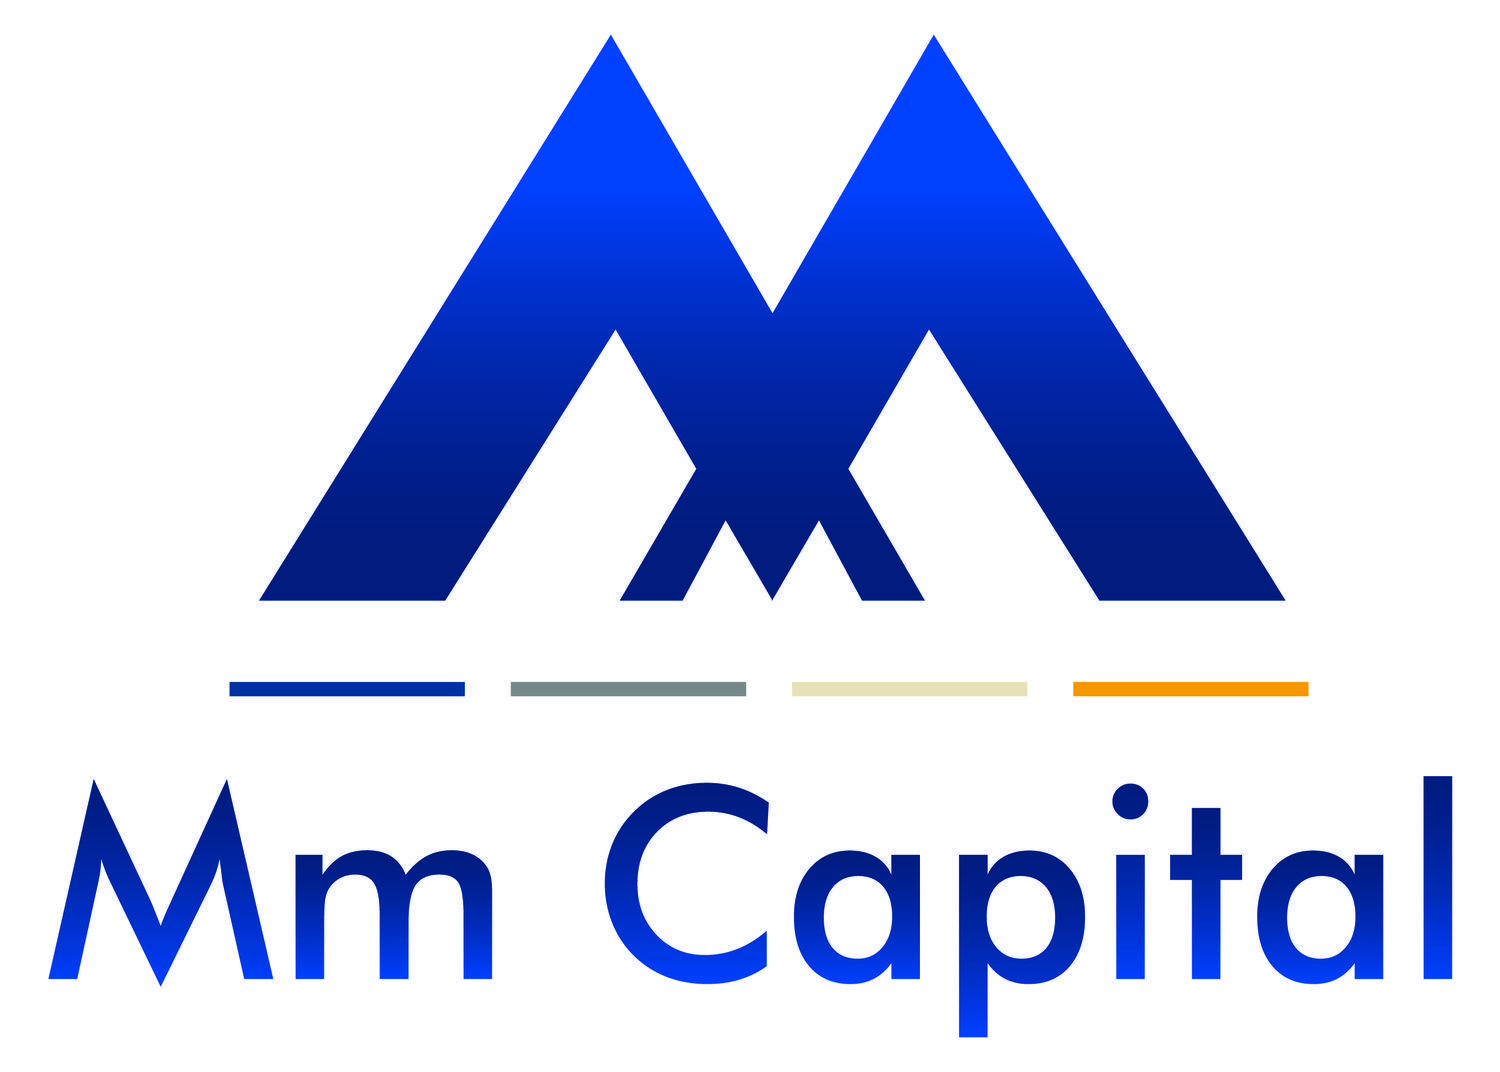 mm Company Logo - Mm Capital